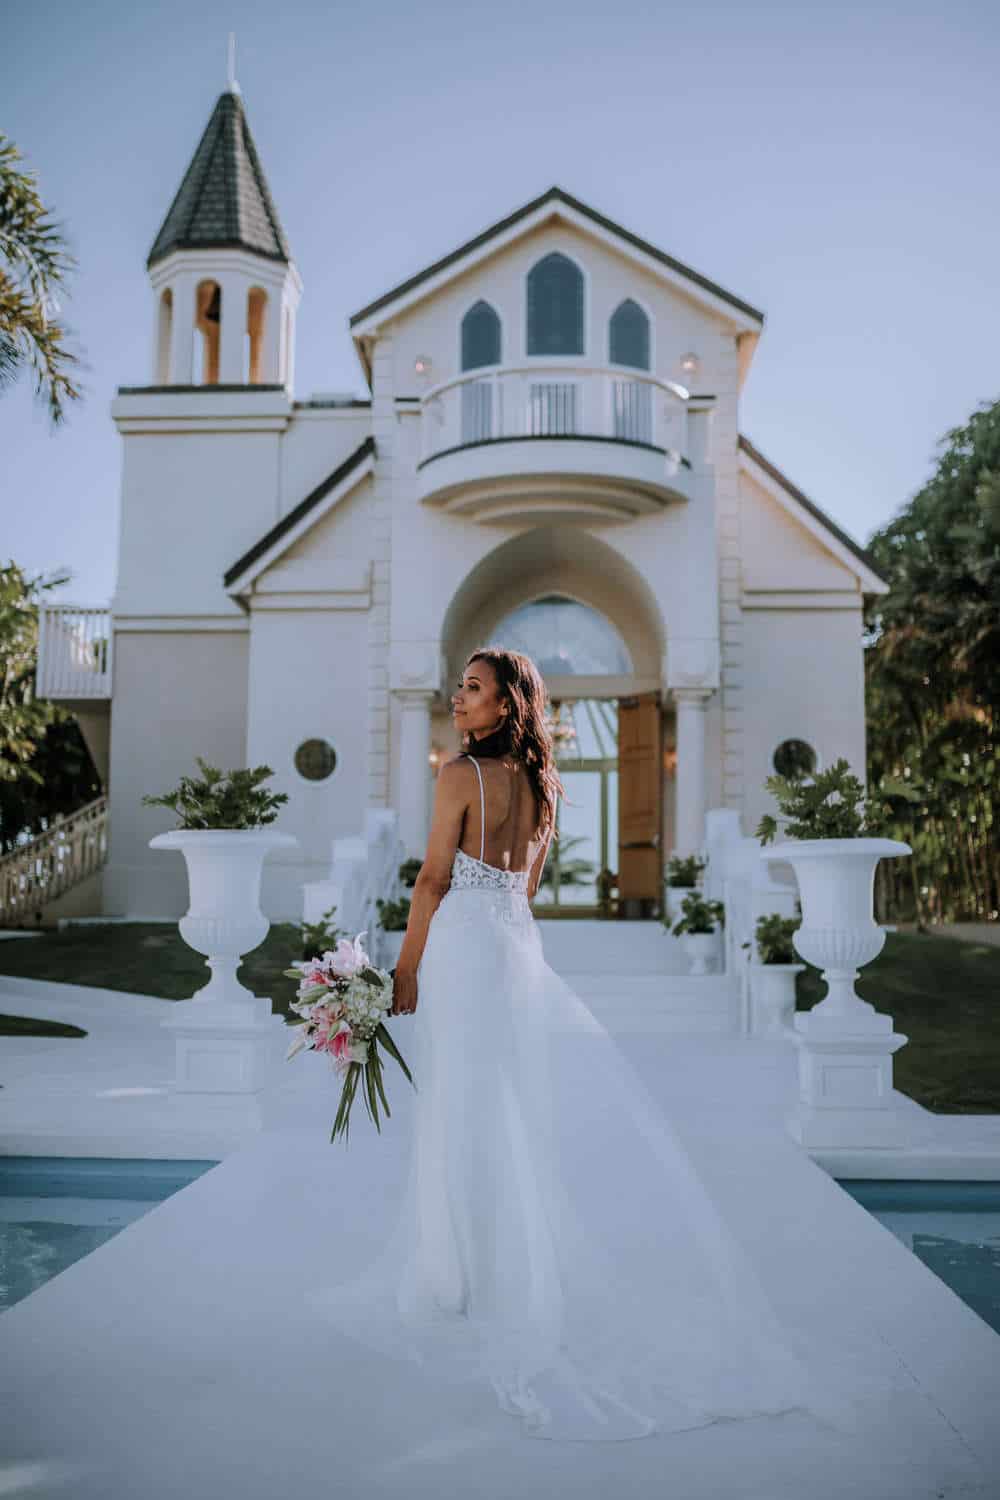 Top 5 Oahu Wedding Venues by Anela Benavides, Oahu Hawaii Wedding Photographer, includes wedding venues and tips for planning a wedding. #Weddingvenue #Weddingplanning